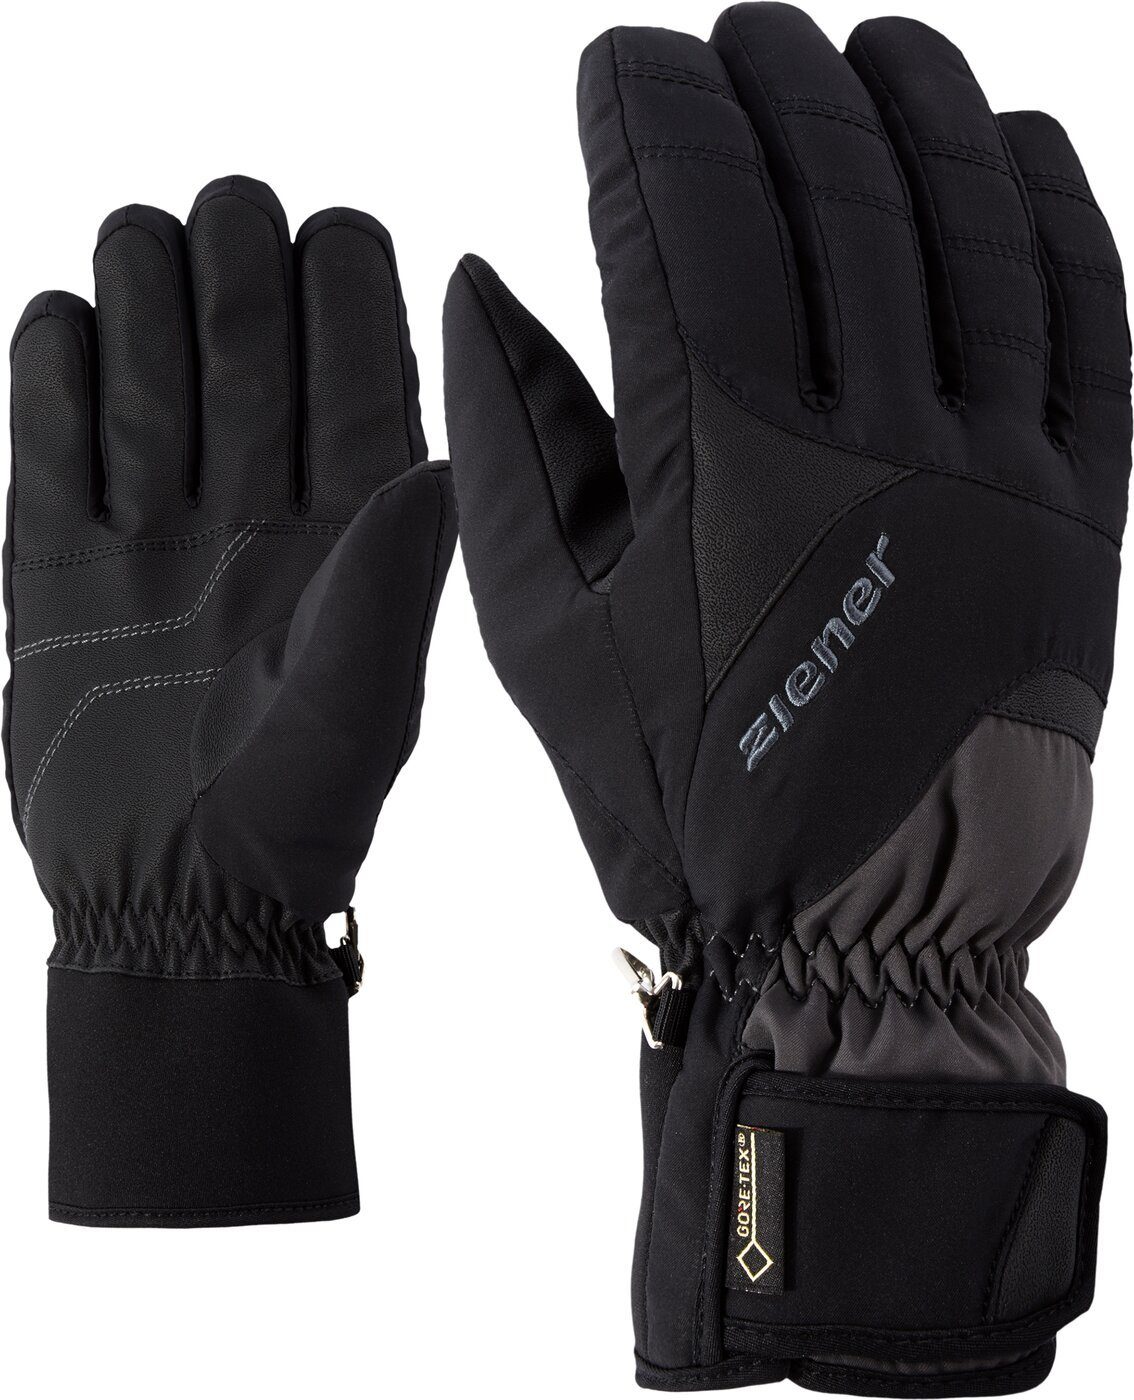 Ziener Fleecehandschuhe GUFFERT GTX glove ski alpine 1512 graphite/black